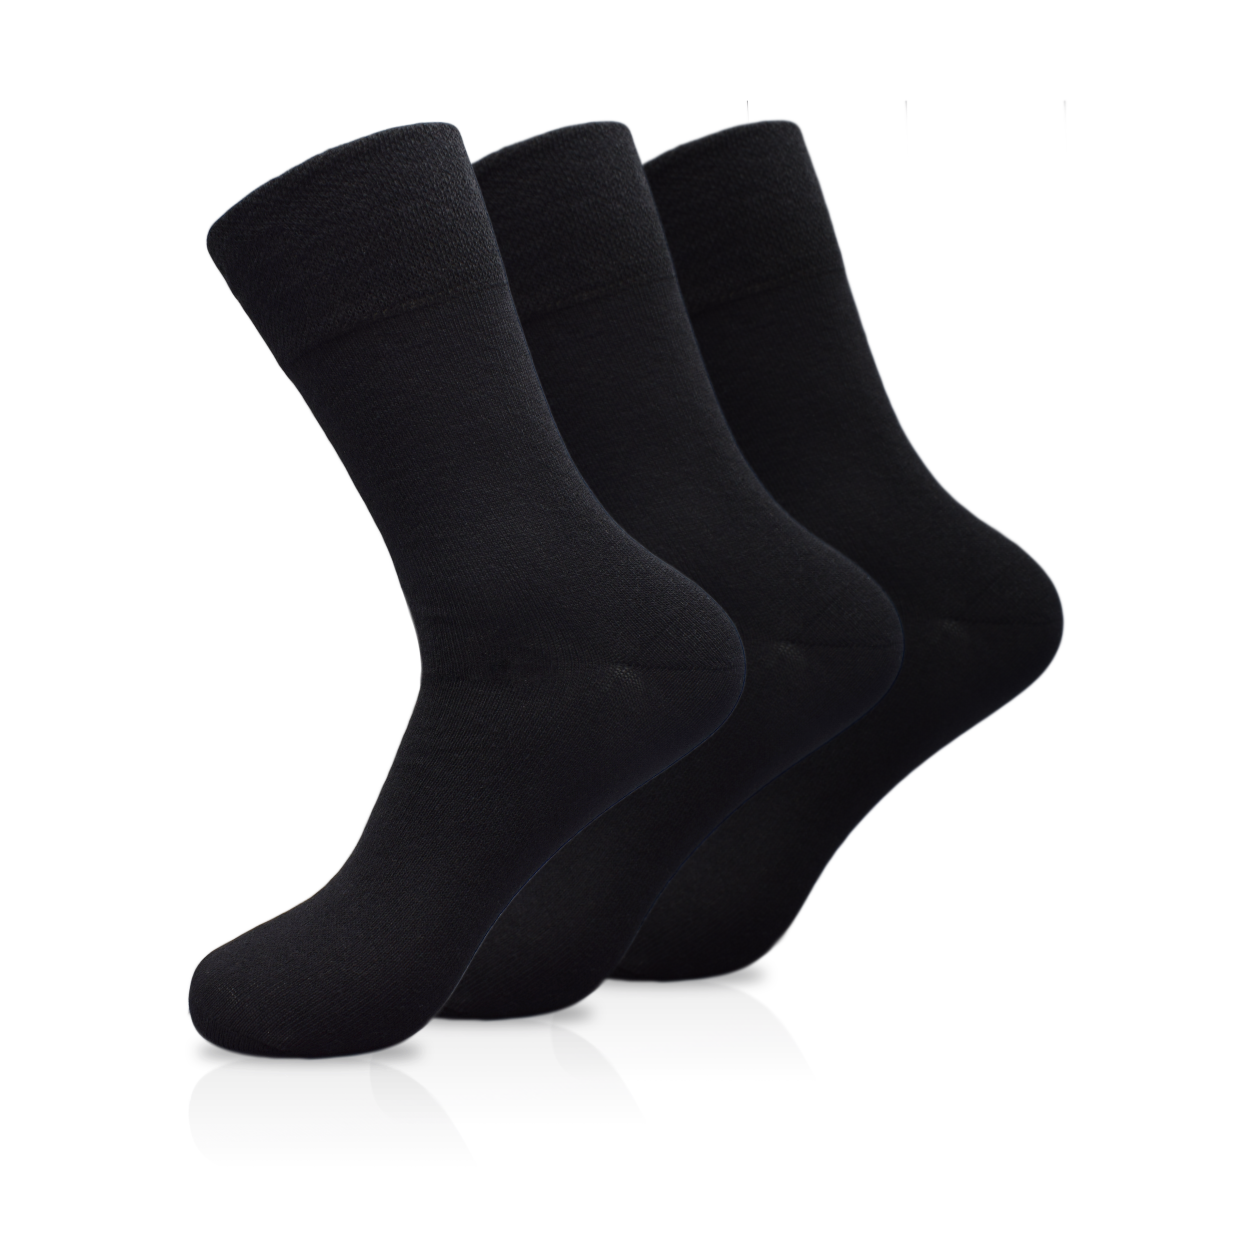 3x Pairs of Non Elastic Diabetic Socks for Women - Nuova Health